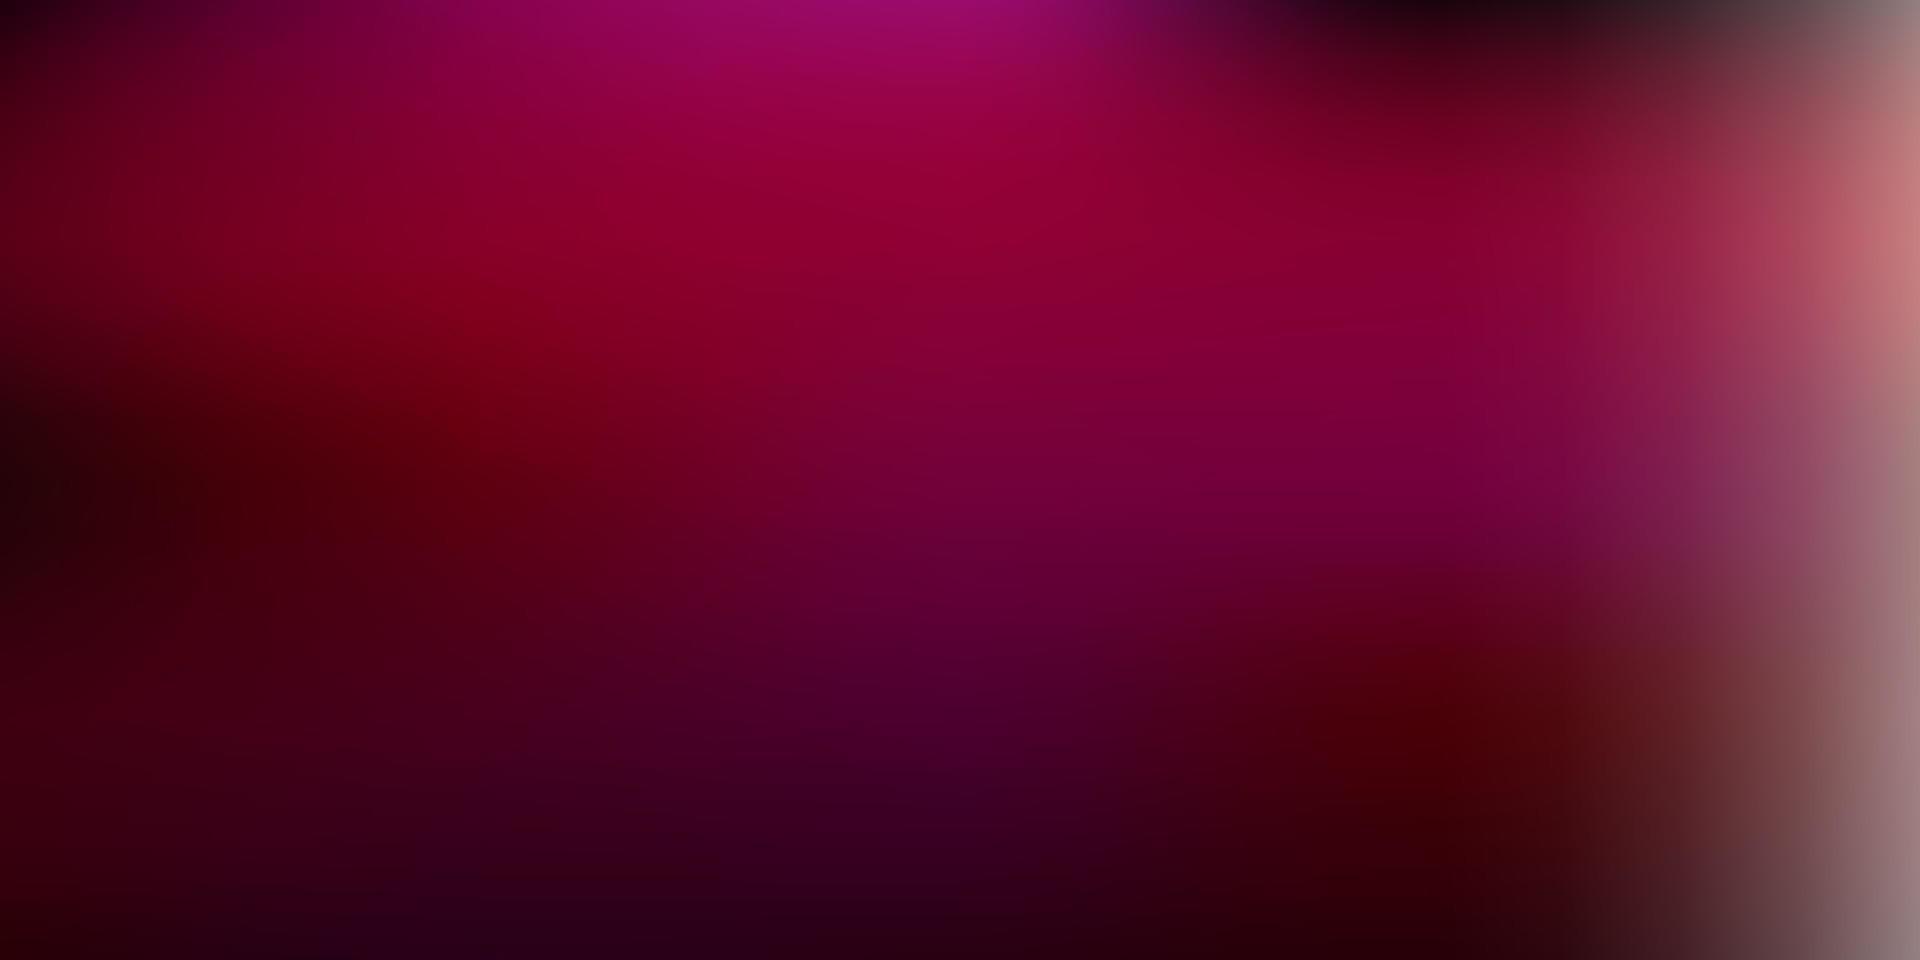 Light pink vector blur background.